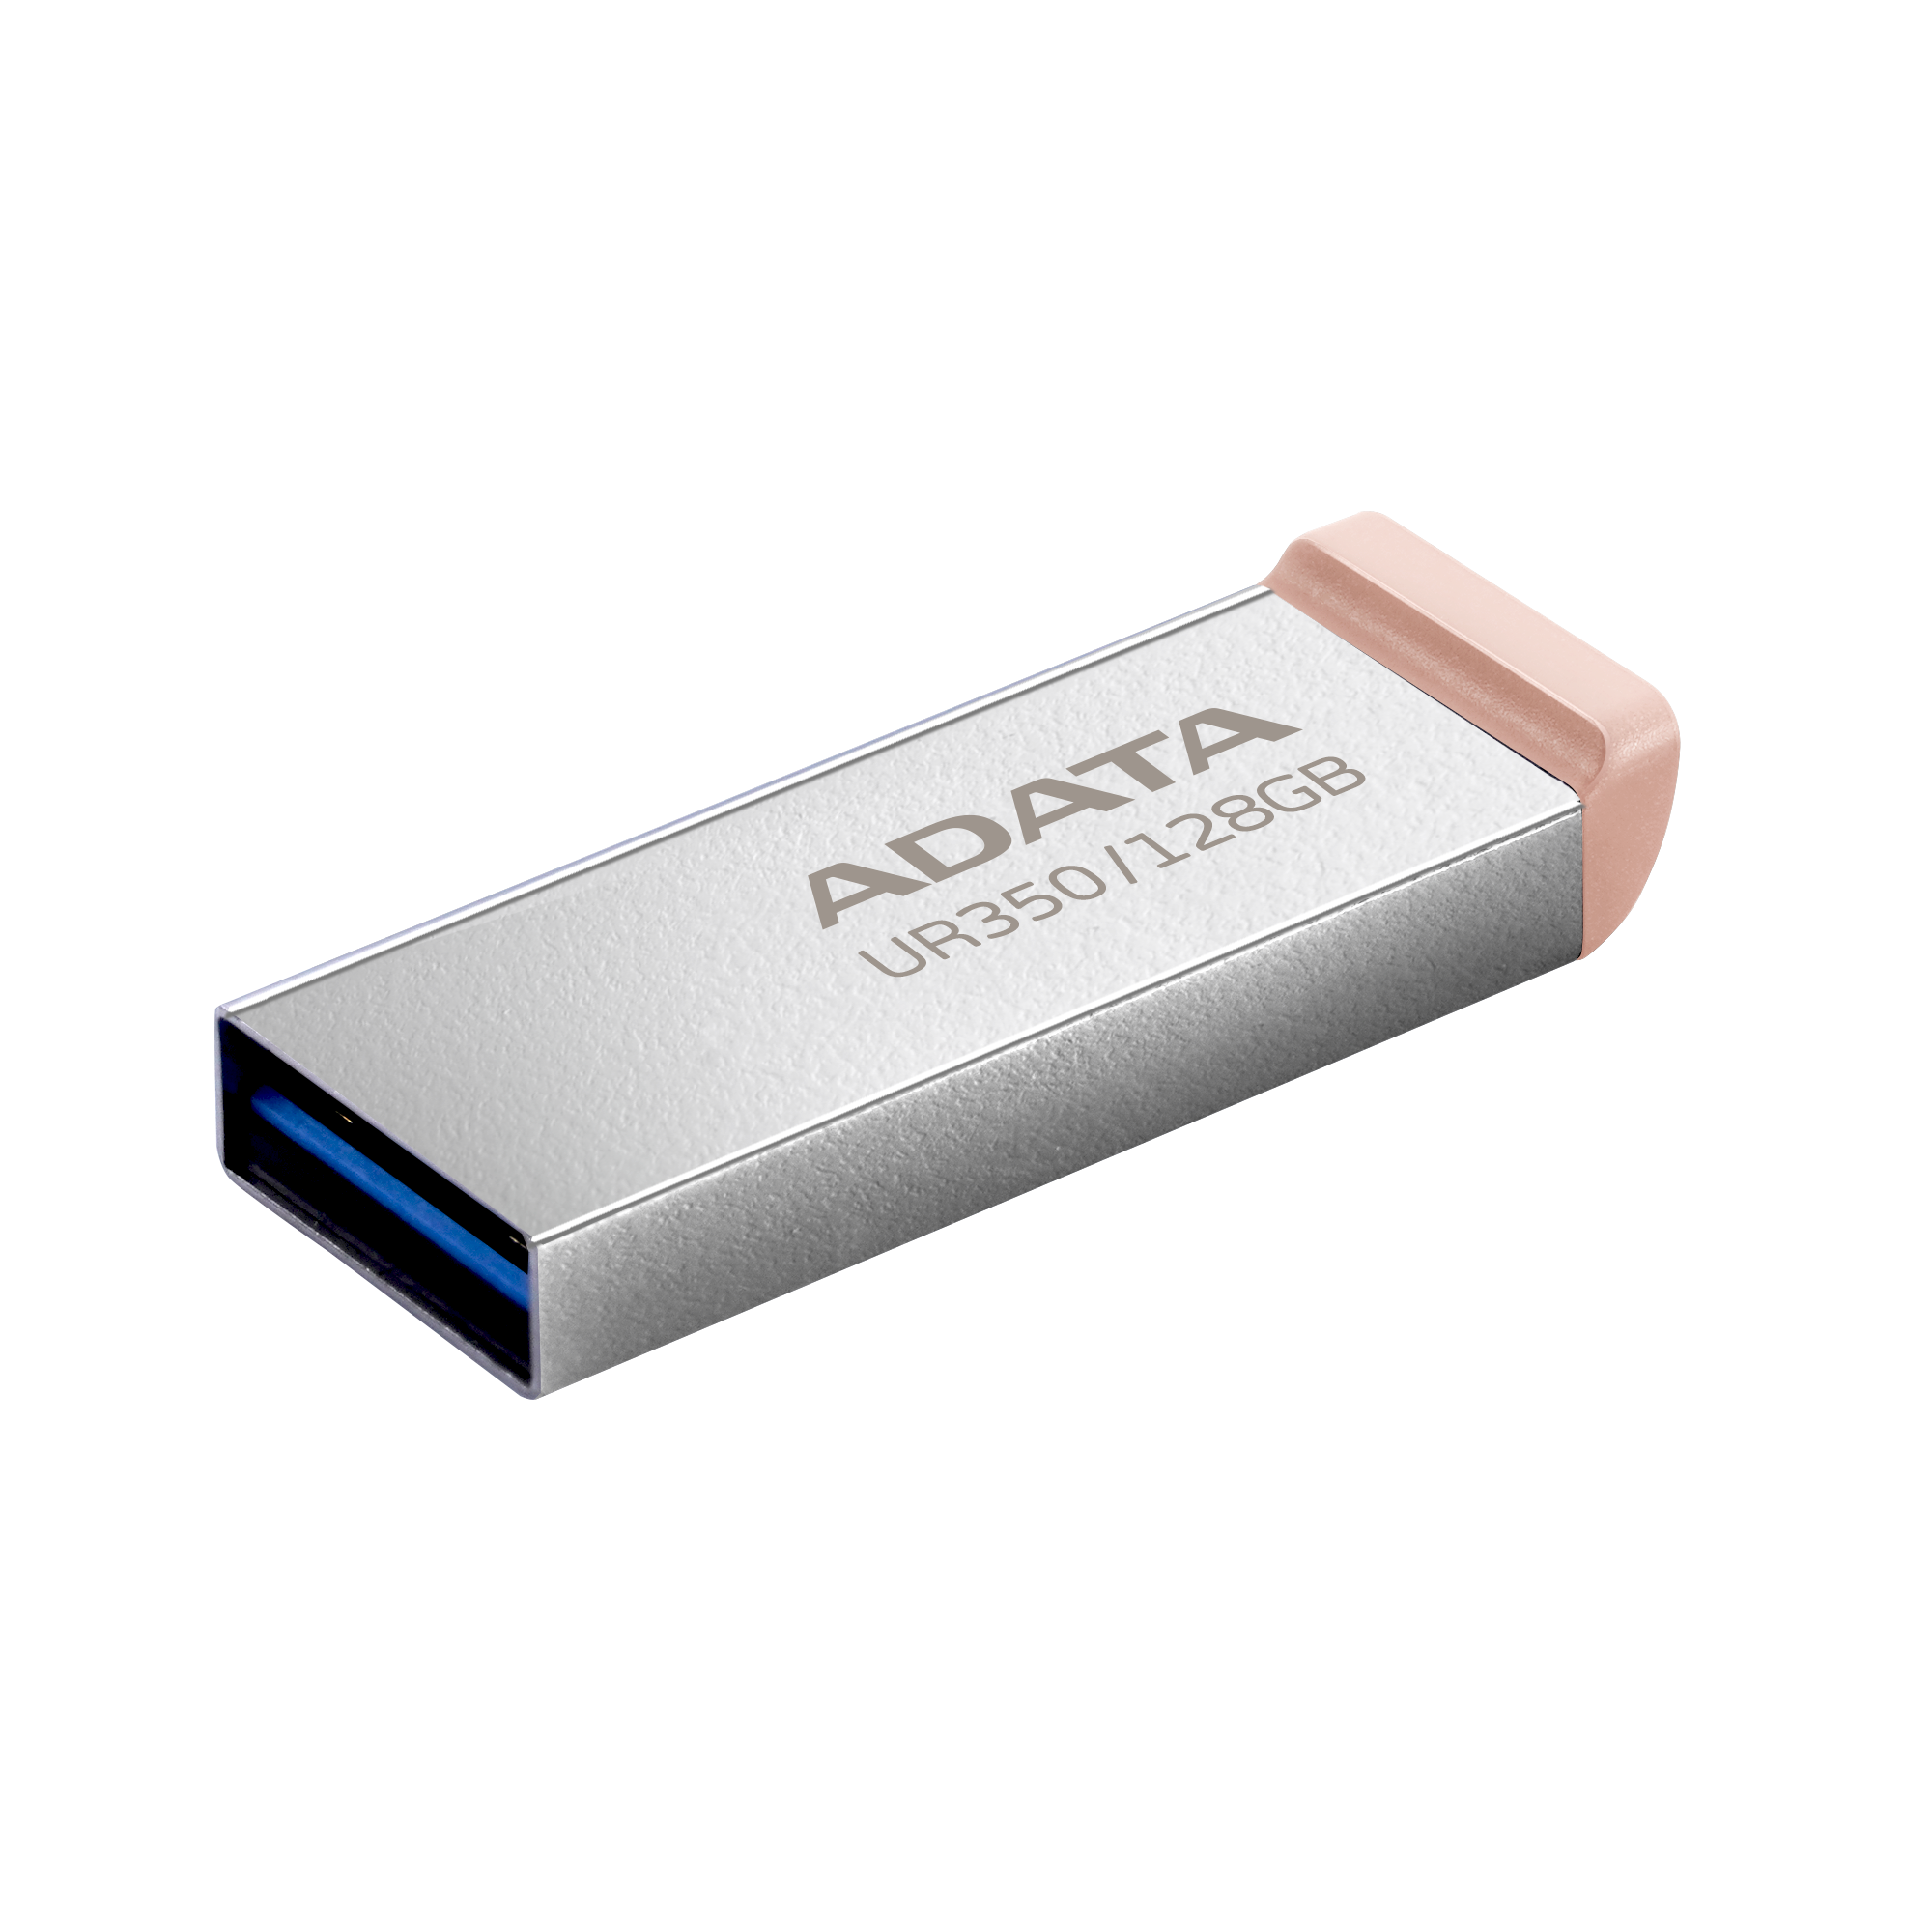 ADATA UR350/ 128GB/ USB 3.2/ USB-A/ Hnědá 